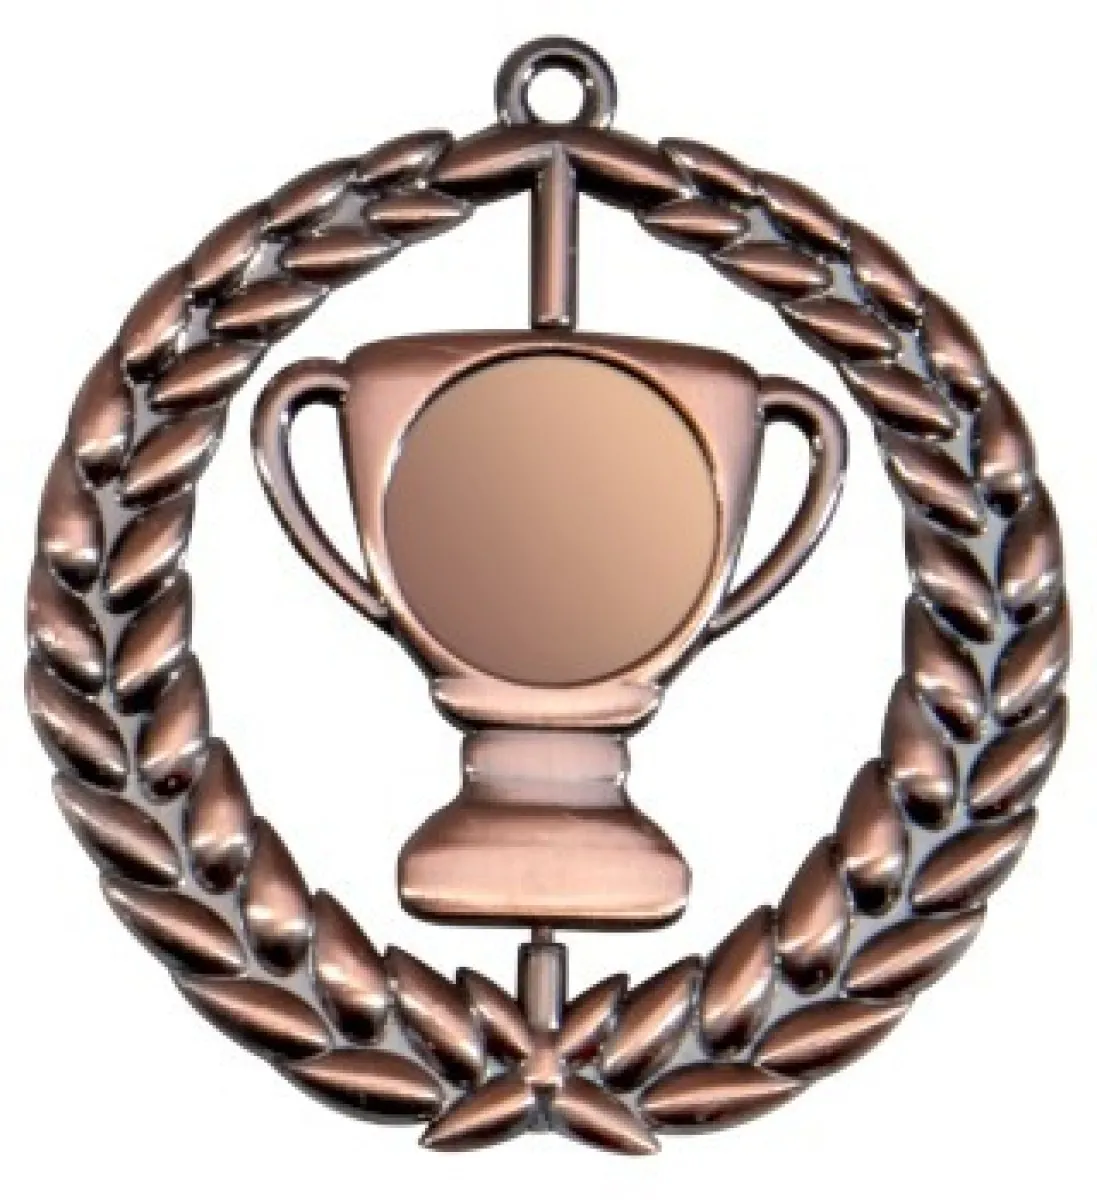 Gran medalla de zamak, 85 mm de diámetro